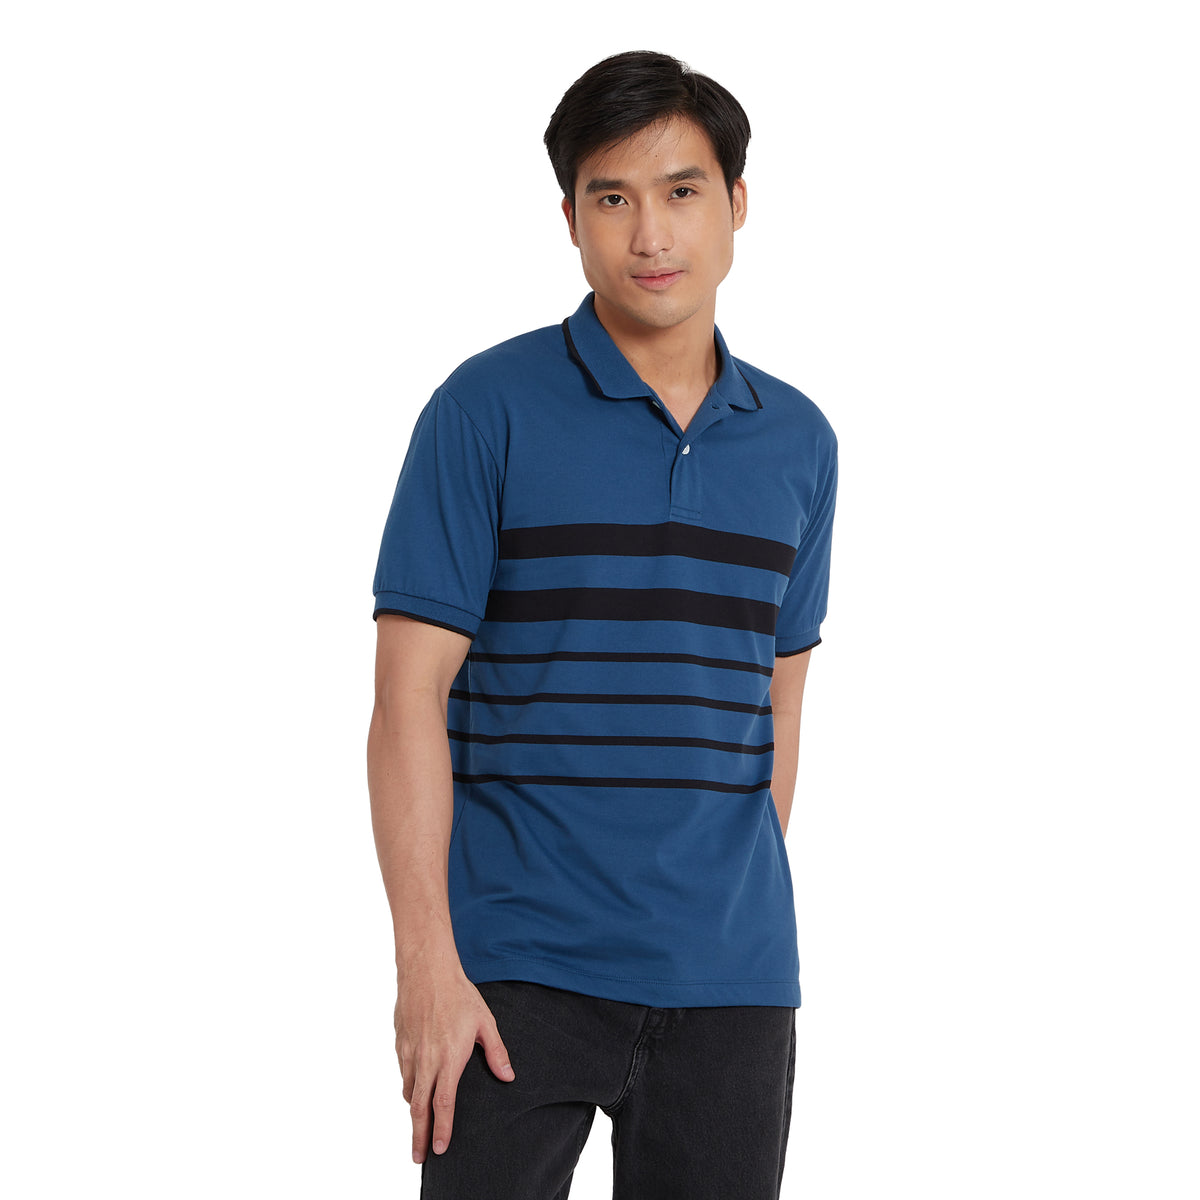 Cubic Mens Stripes  Polo Shirt Polo-shirt Collar Top Top for Men - CMS2317C